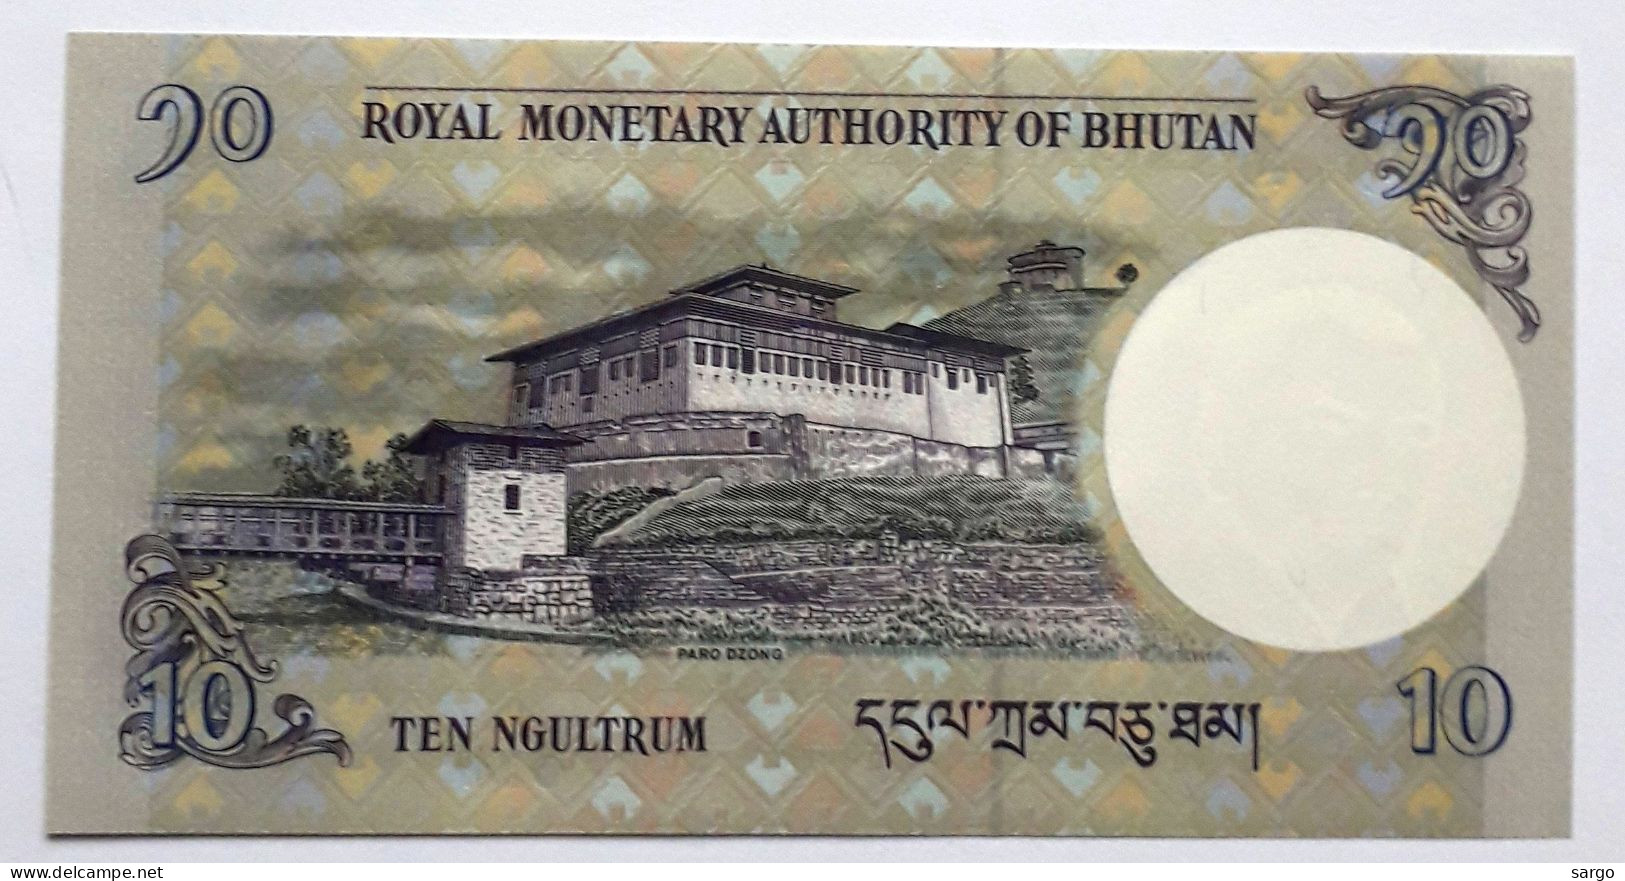 BHUTAN - 20 NGULTRUM - P 29 -  (2013) - UNC - BANKNOTES - PAPER MONEY - CARTAMONETA - - Bhután